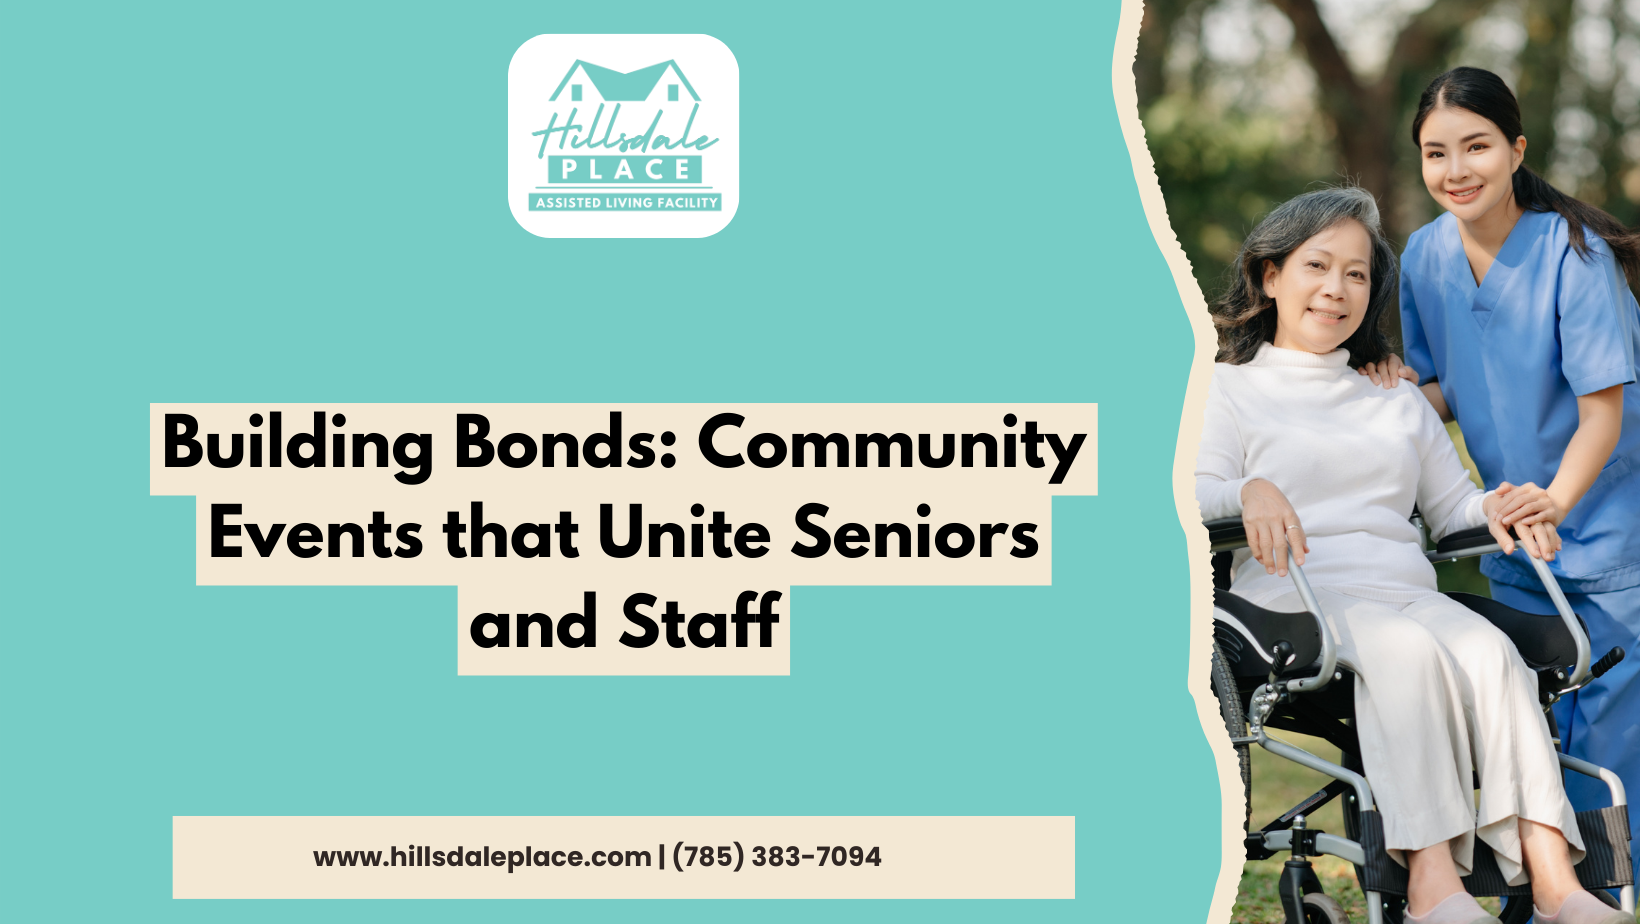 Building Bonds: Community Events that Unite Seniors and Staff